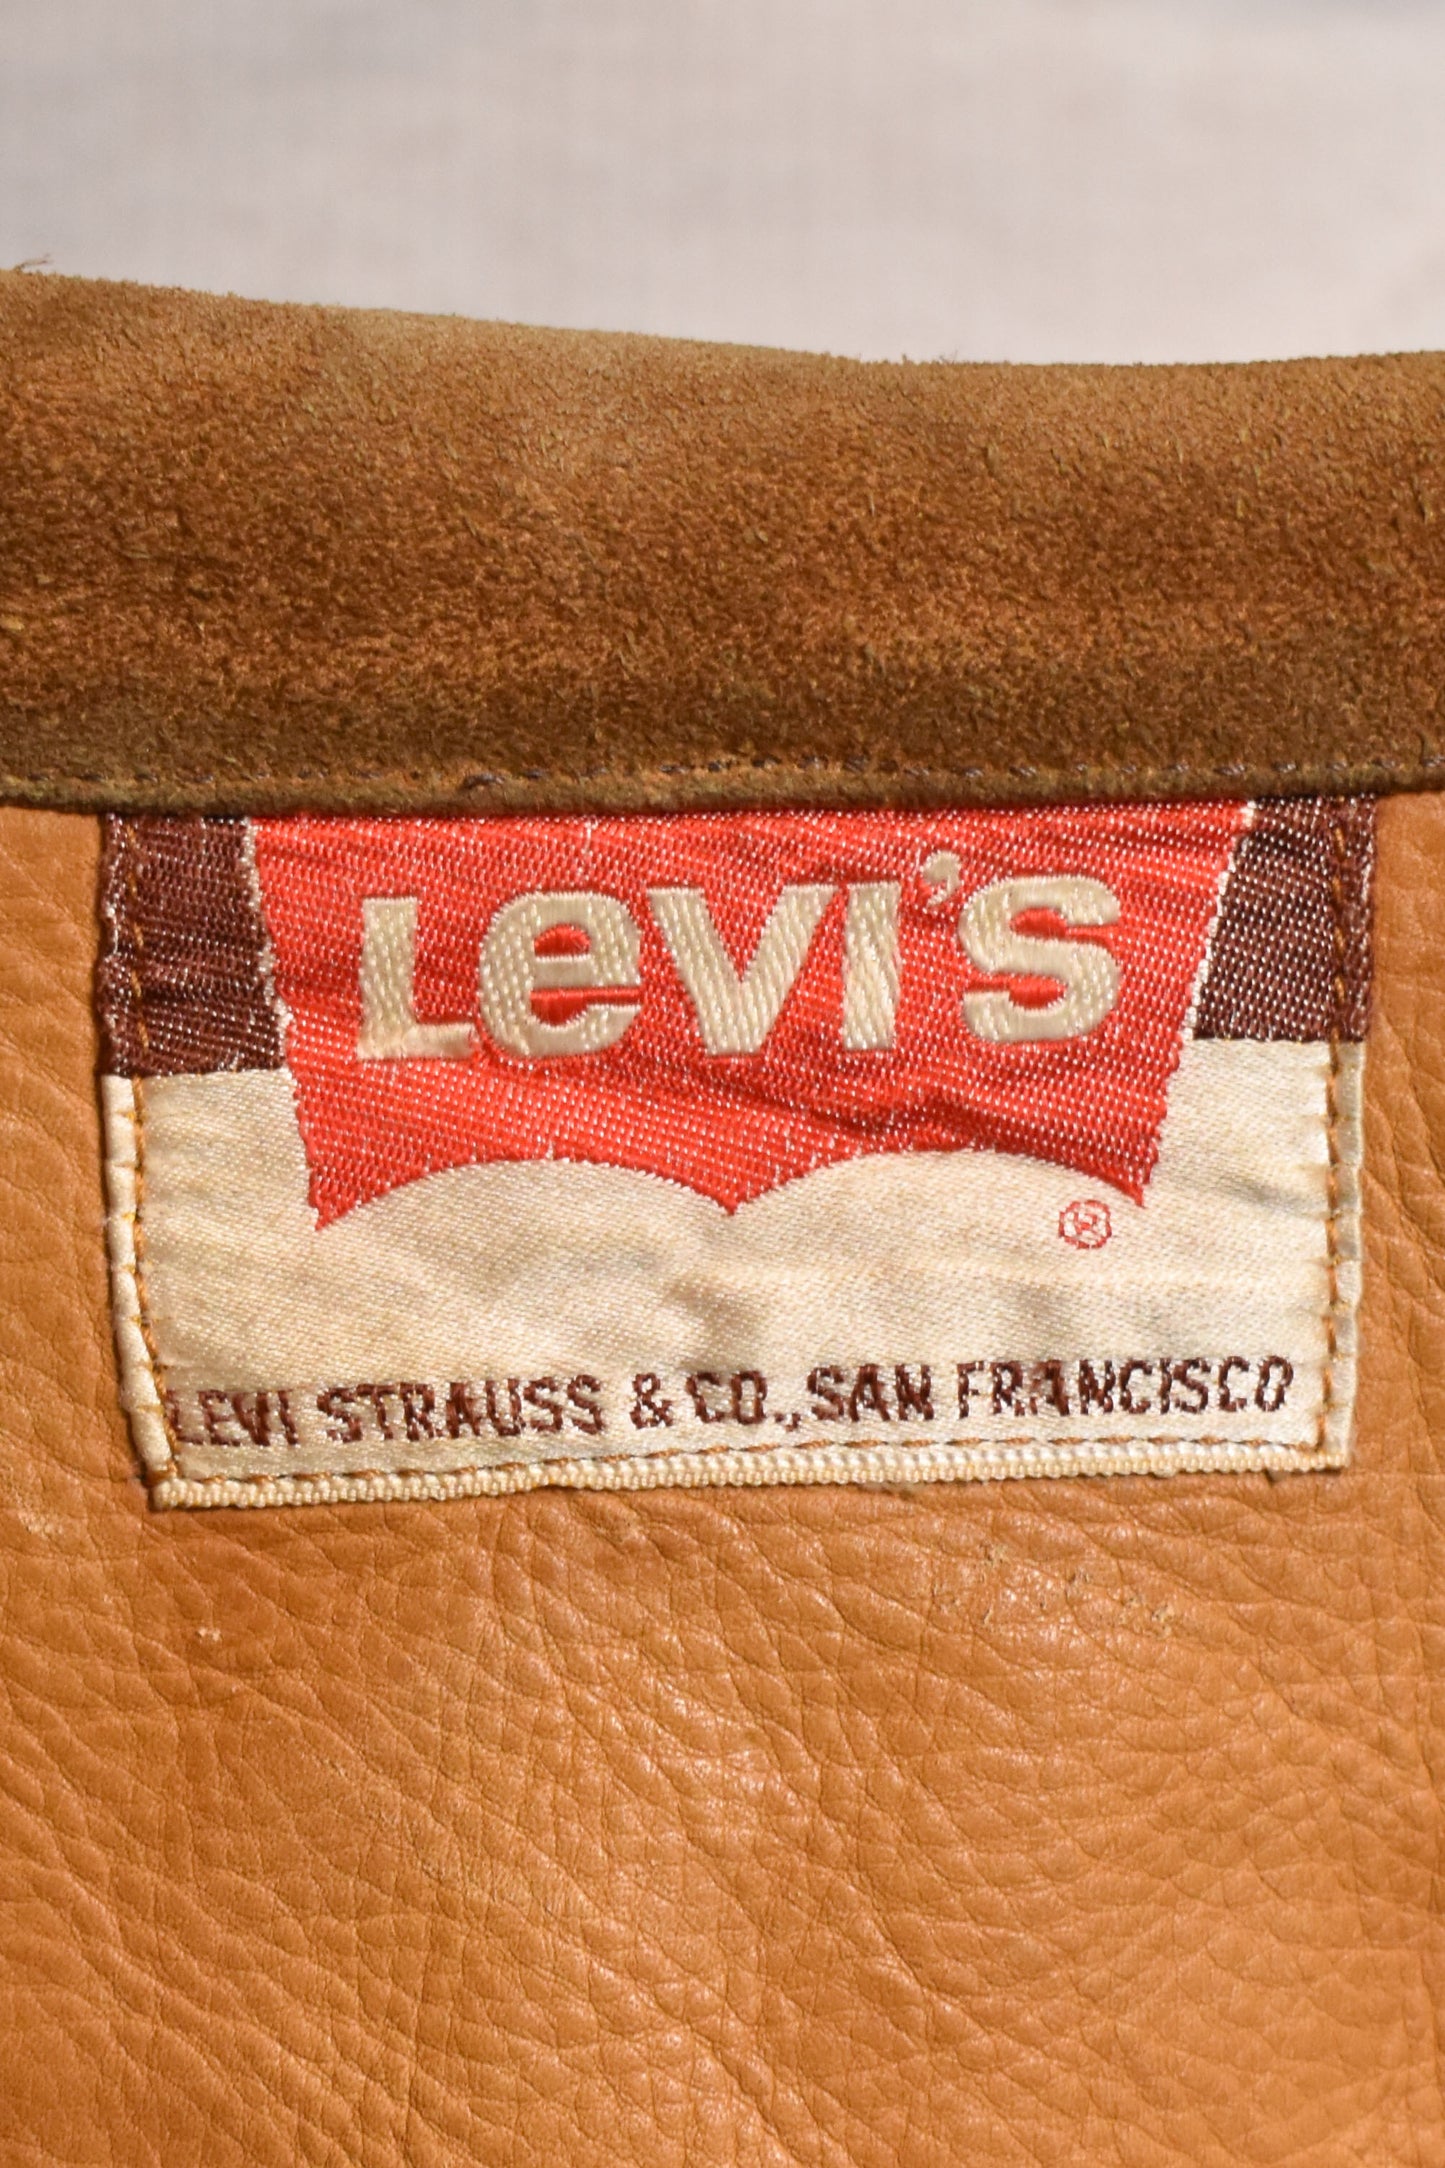 Vintage 1960s "Levi's" Big E Suede Cowhide Leather Trucker Jacket